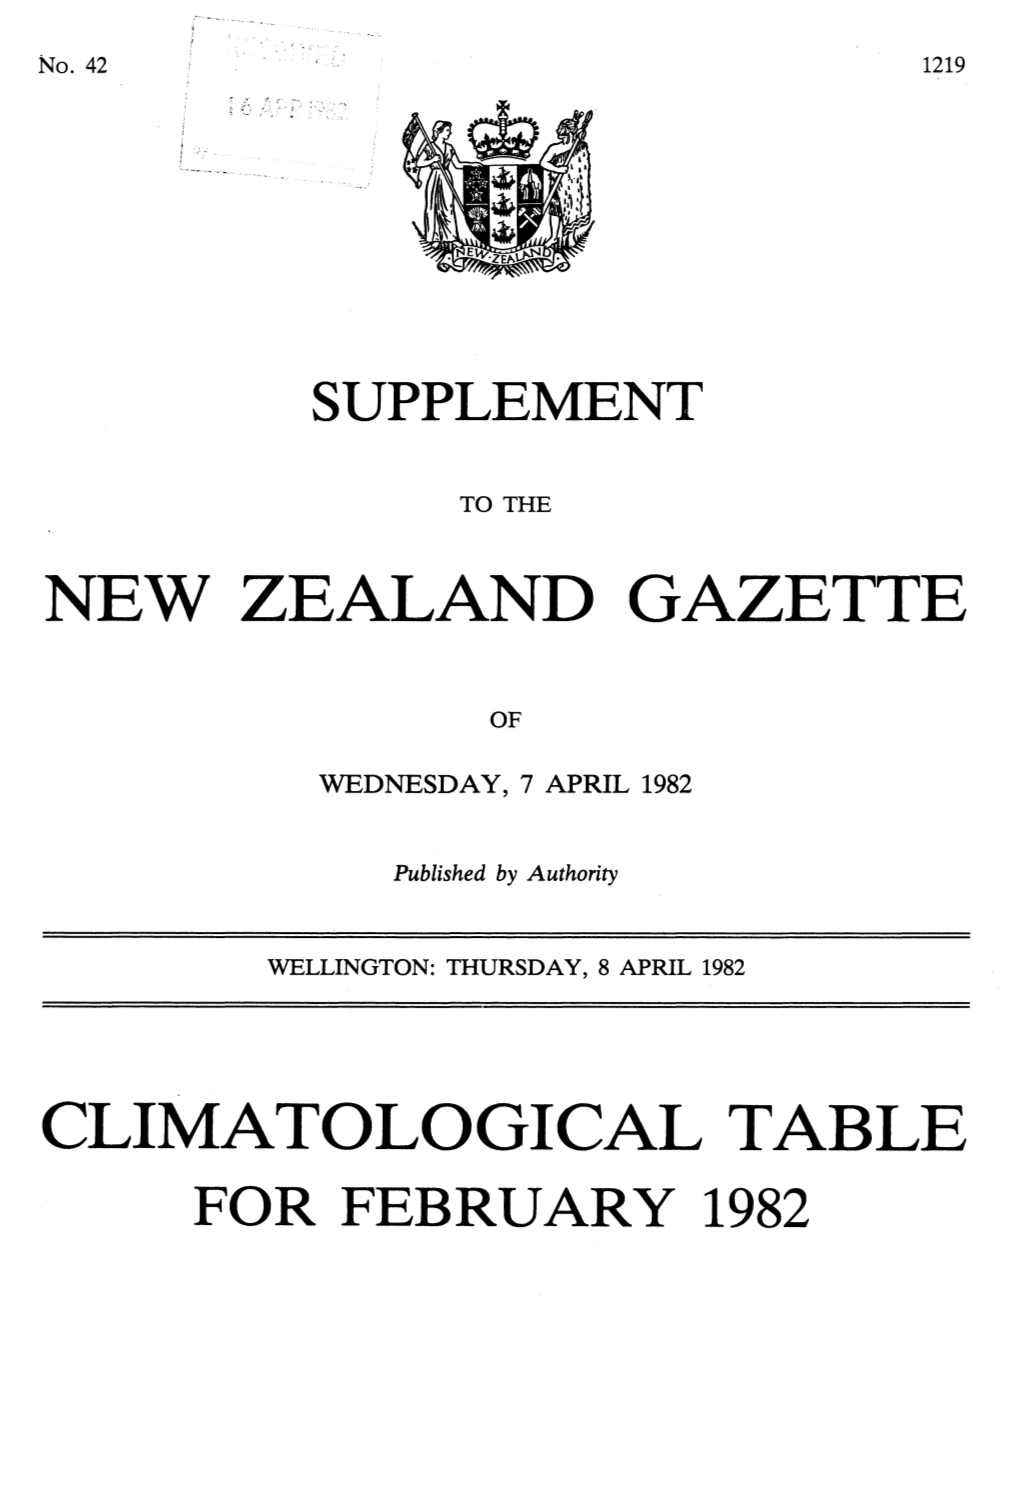 New Zealand Gazette Climatological Table